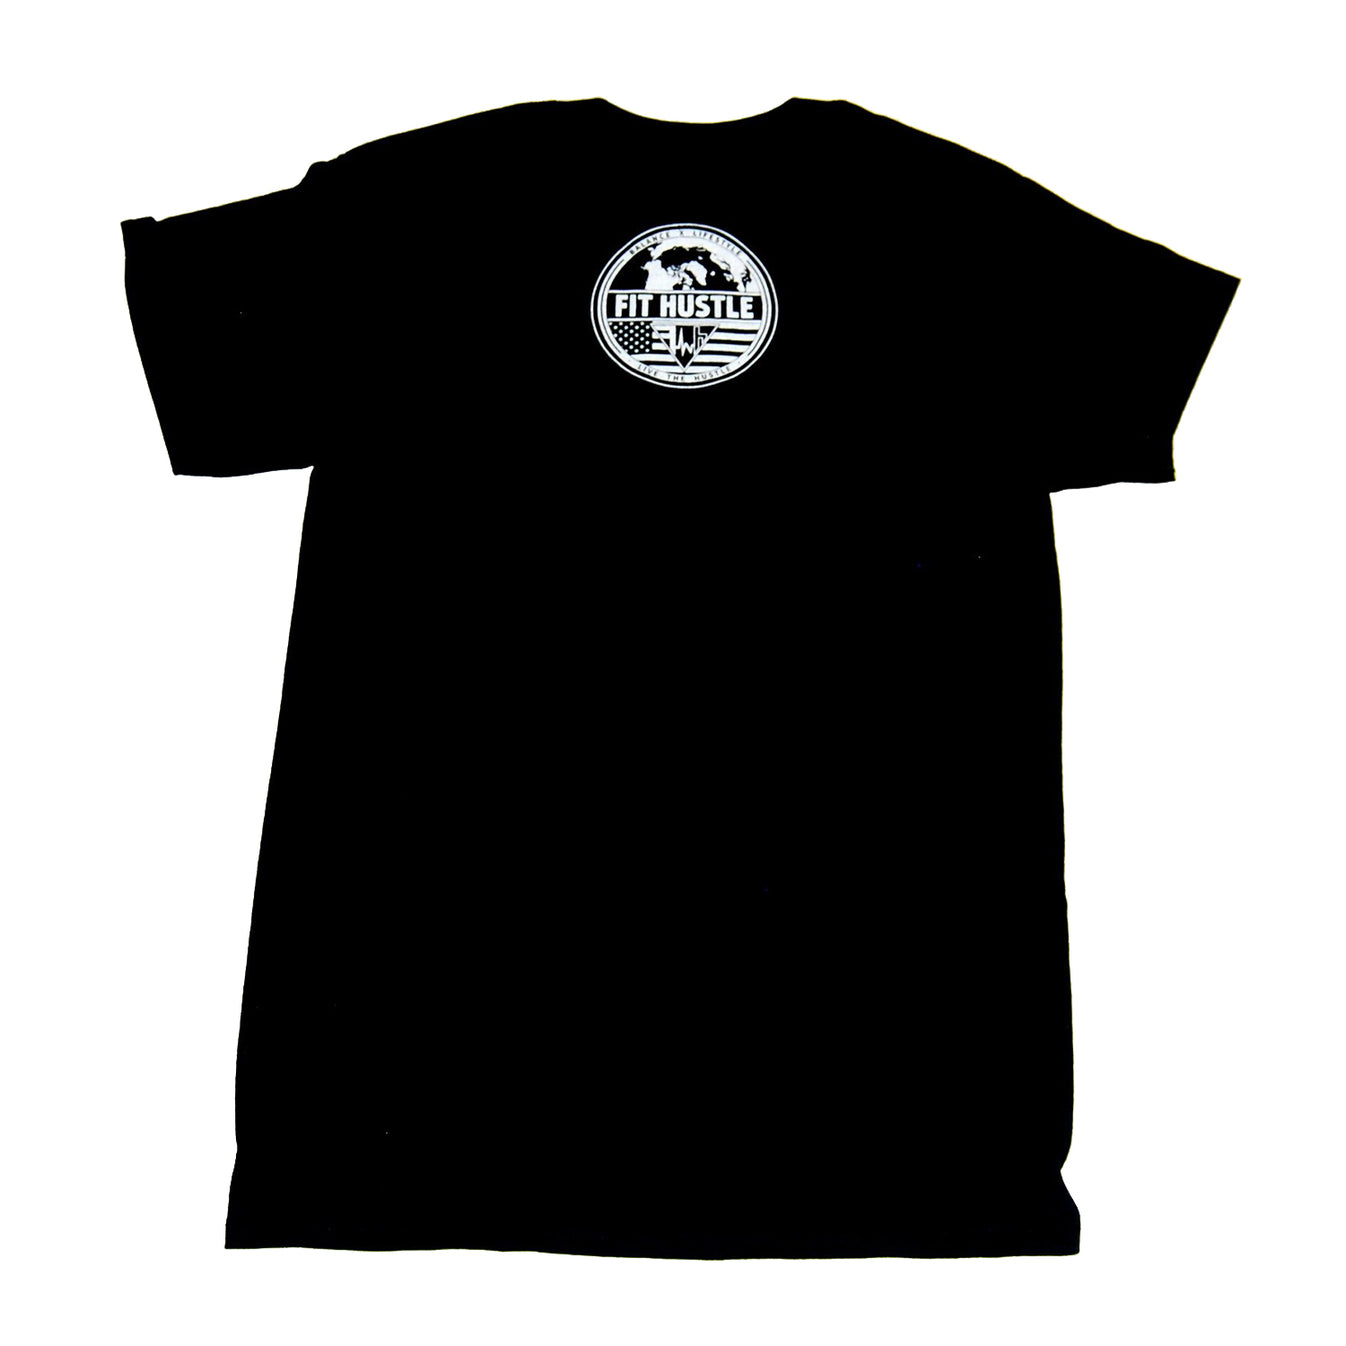 “GOOD VIBES - SPREAD EM'” Black T-Shirt – FIT HUSTLE®